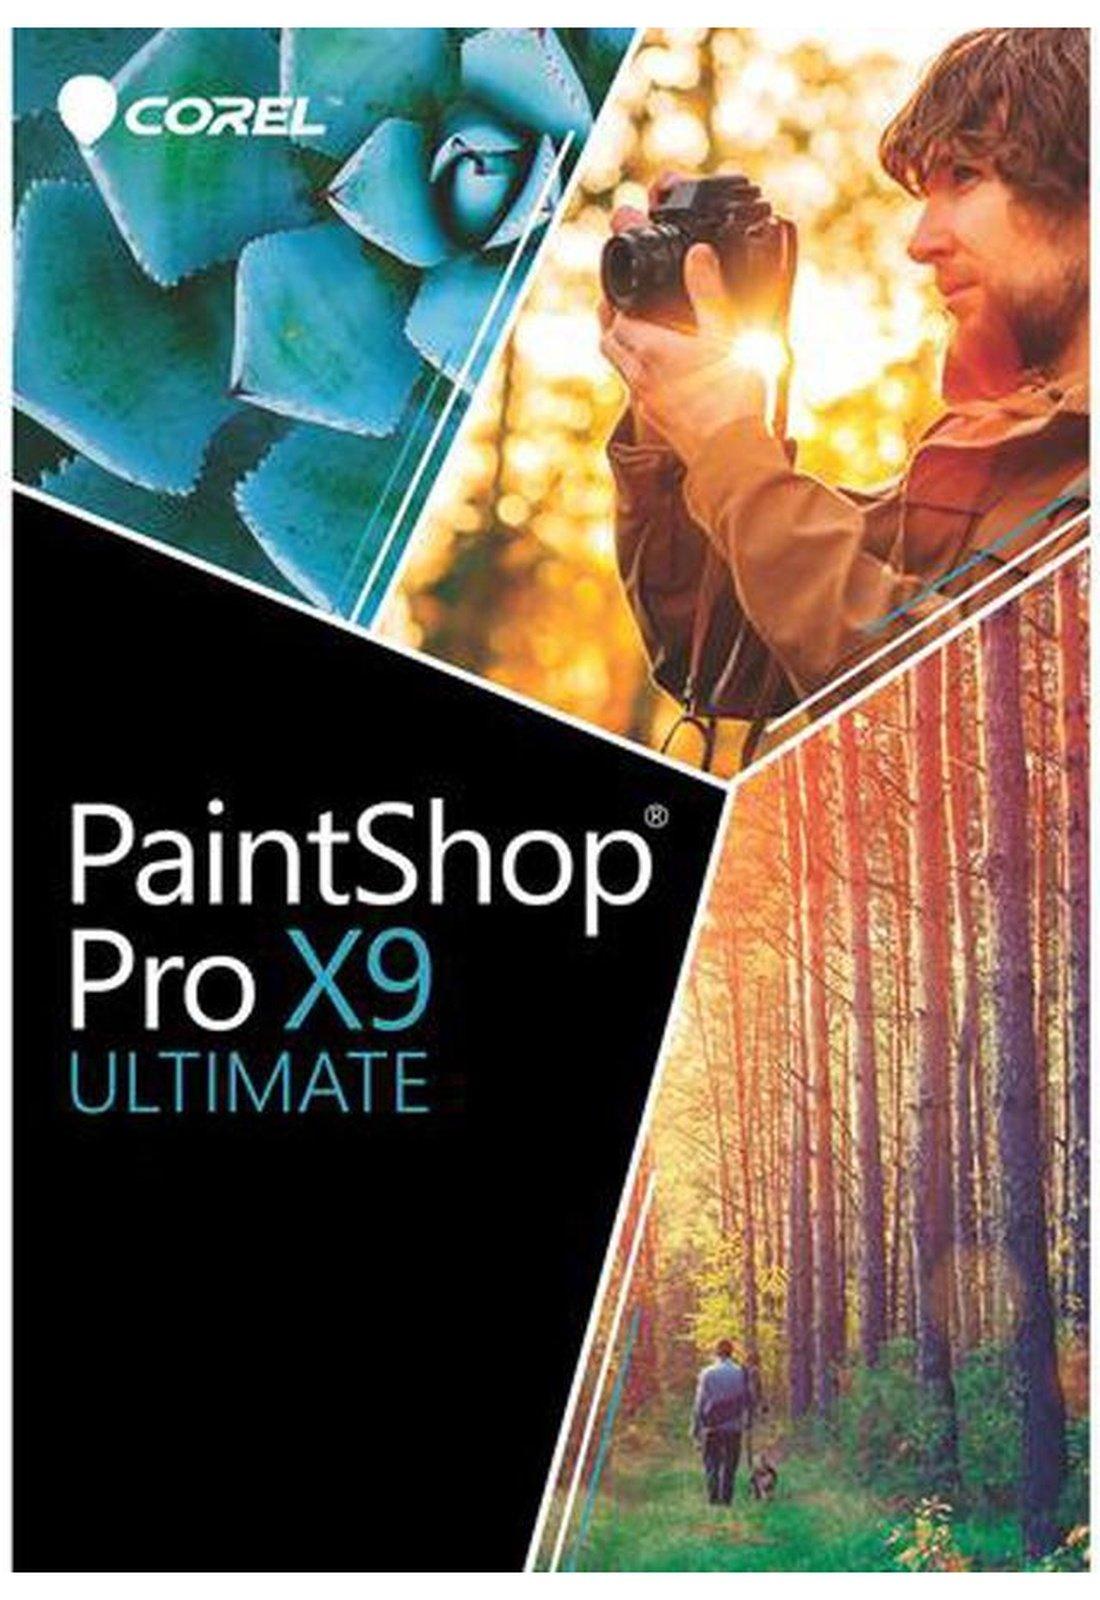 Corel PaintShop Pro X9 Ultimate - Instant Download for Windows (1 Computer) - SoftwareCW - Authorized Reseller